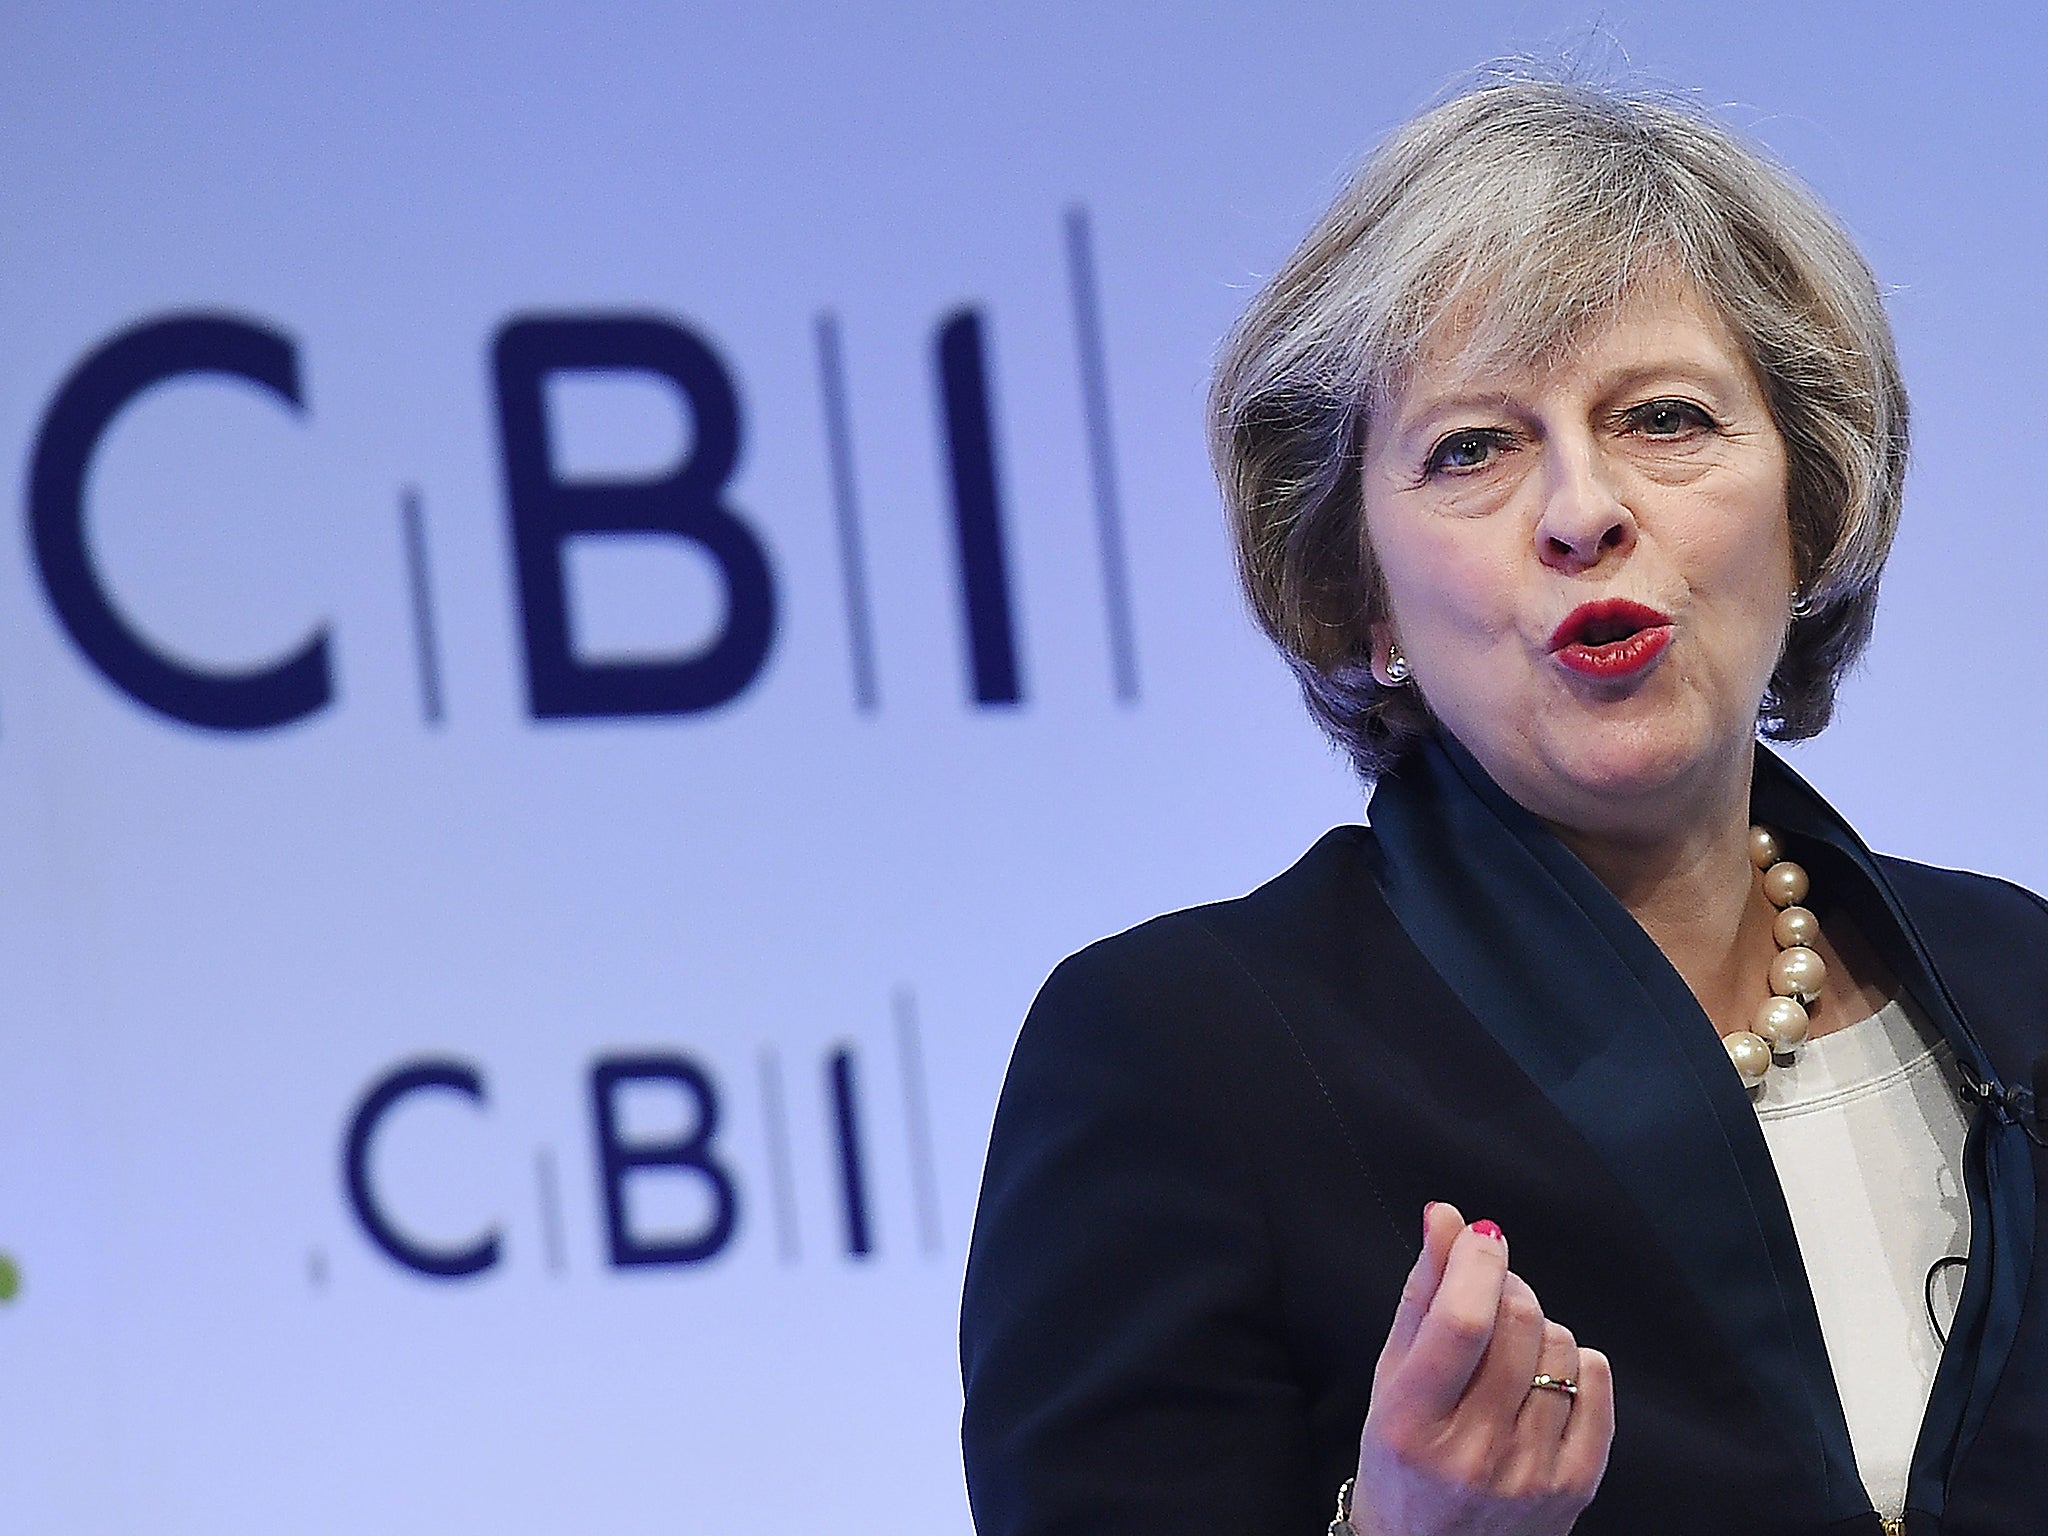 Prime Minister Theresa May tells CBI she'll play nice